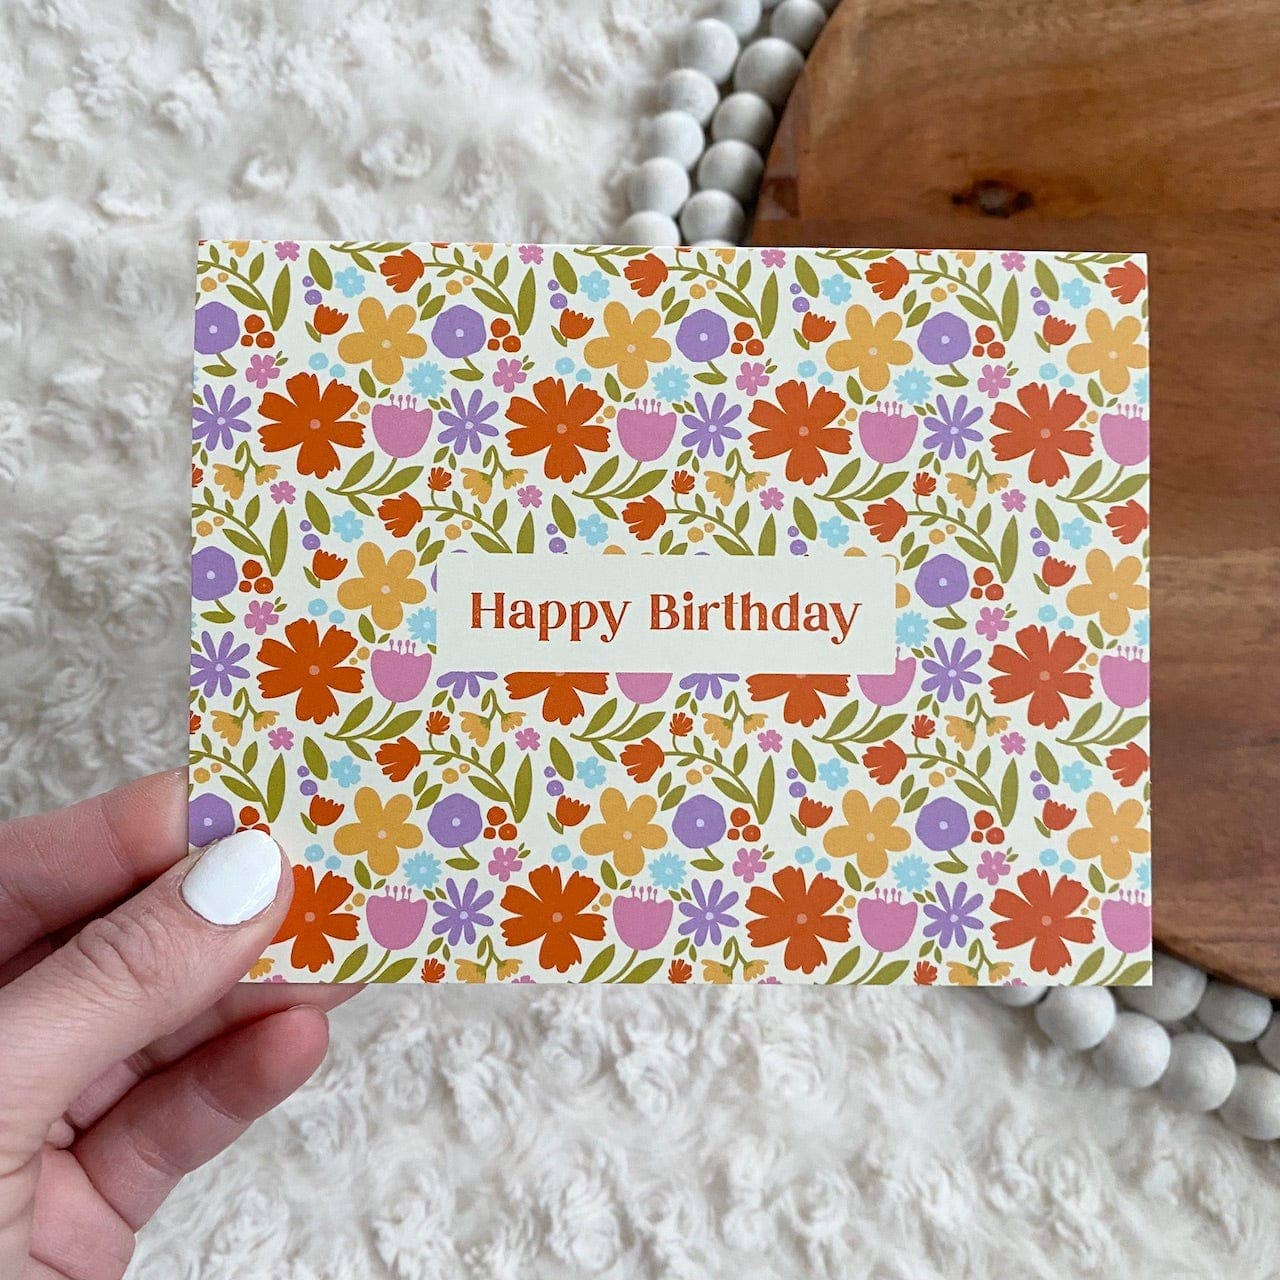 "Happy Birthday" Floral Greeting Card